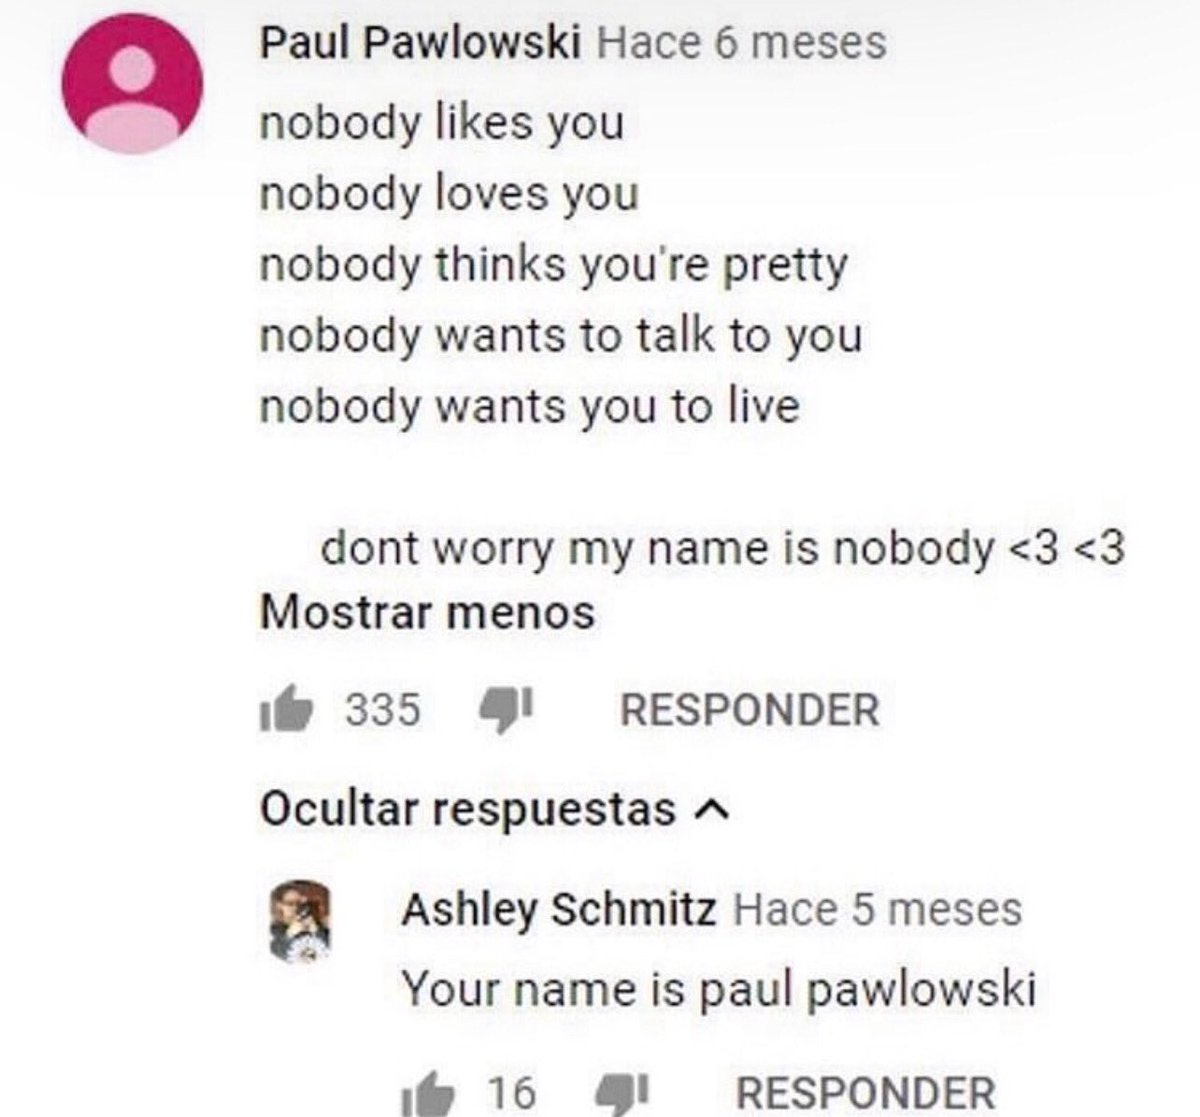 insane youtube comments - paul pawlowski - Paul Pawlowski Hace 6 meses nobody you nobody loves you nobody thinks you're pretty nobody wants to talk to you nobody wants you to live dont worry my name is nobody